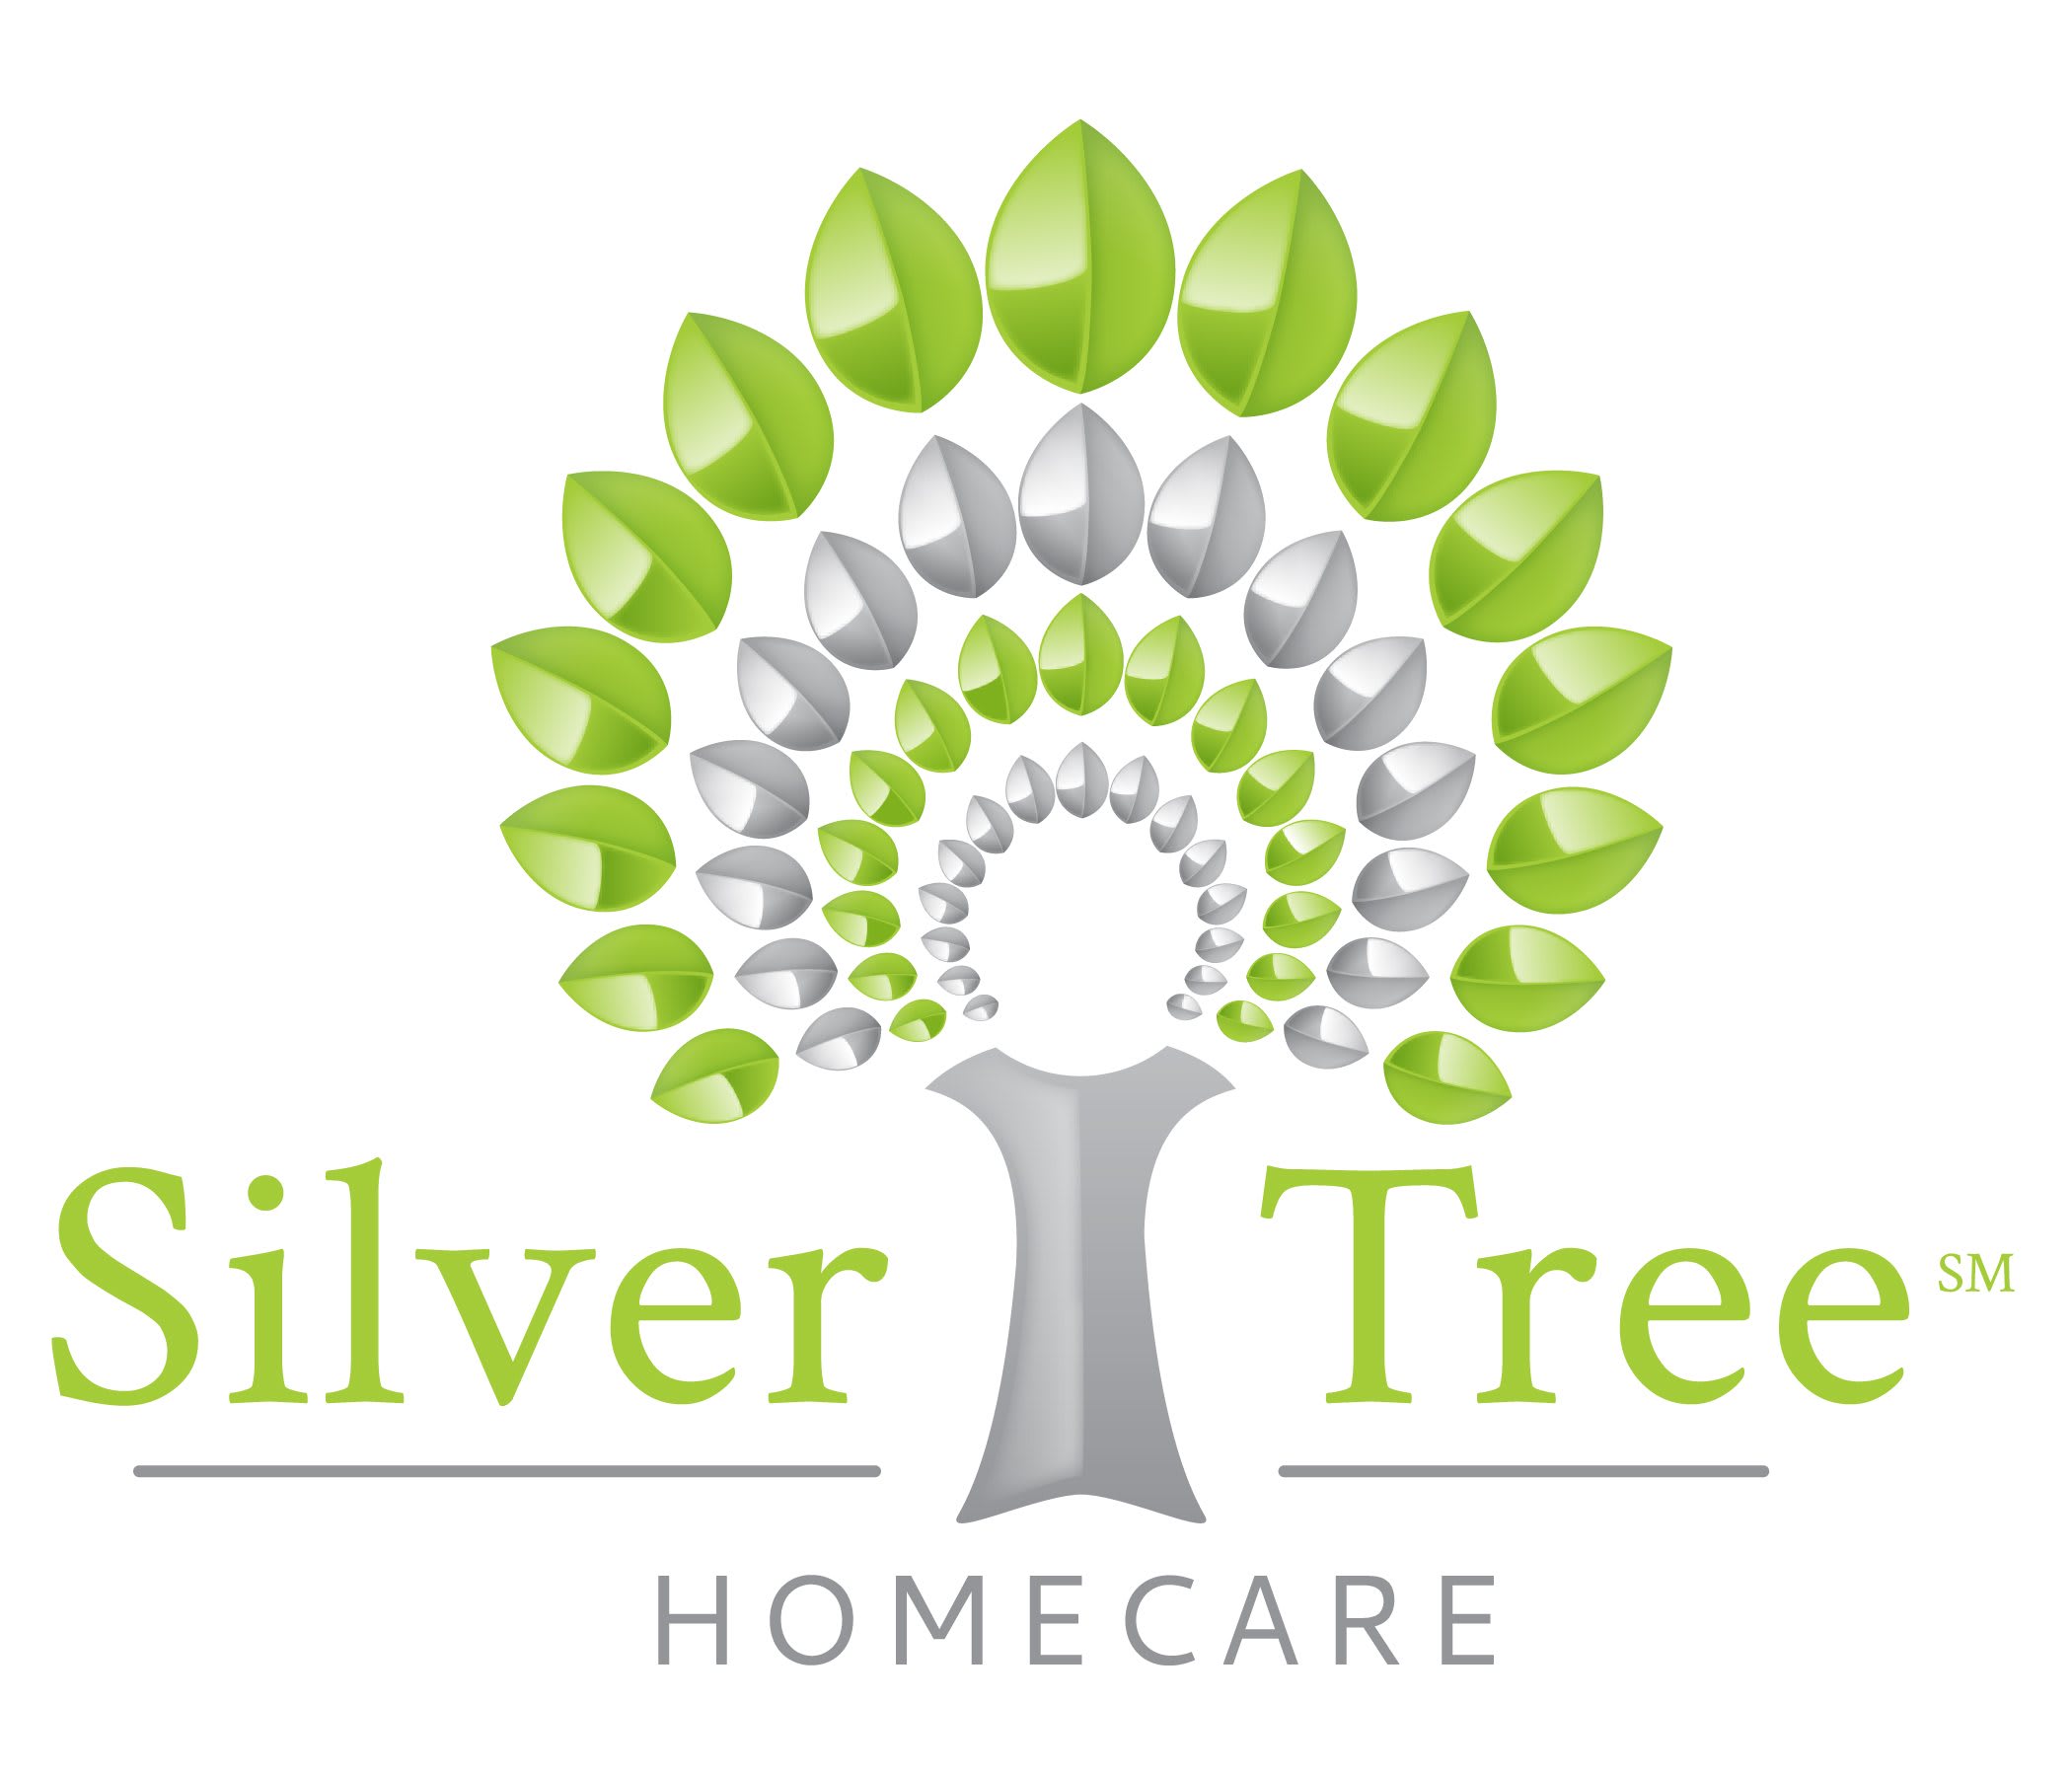 Silver Tree Home Care